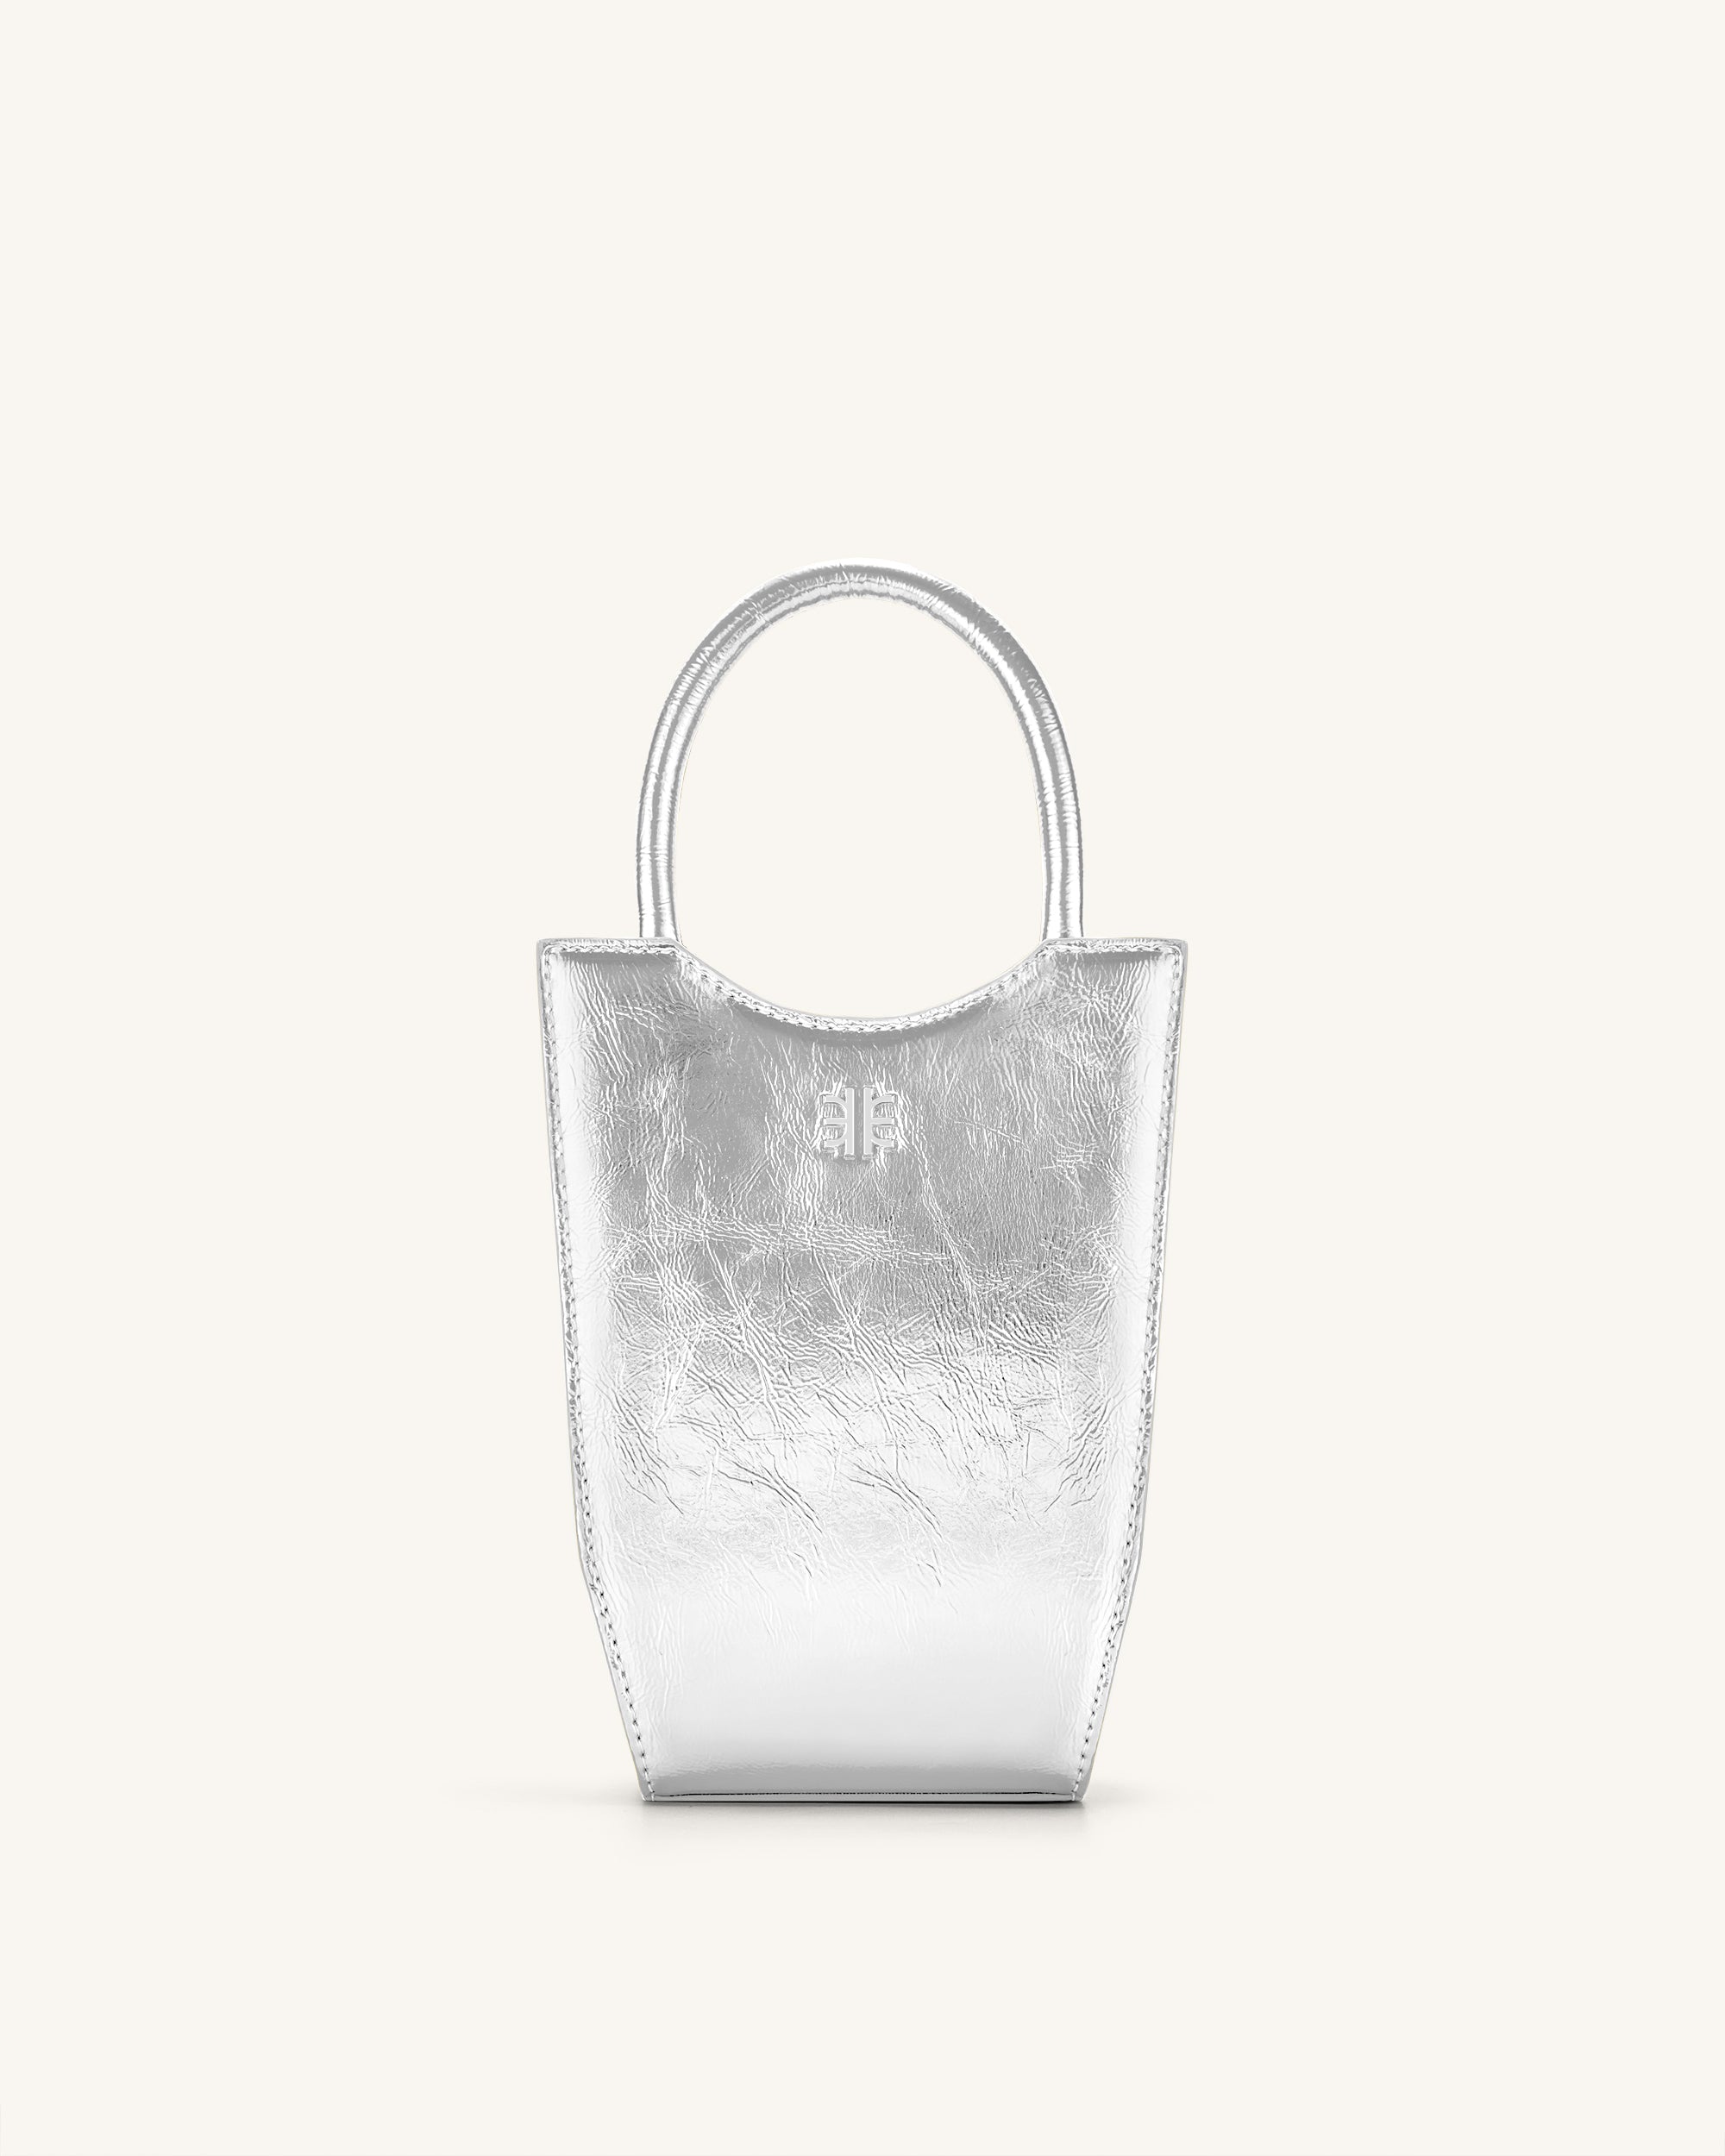 Eva Metallic Sequin Mini Shoulder Bag - Silver Online Shopping - JW Pei